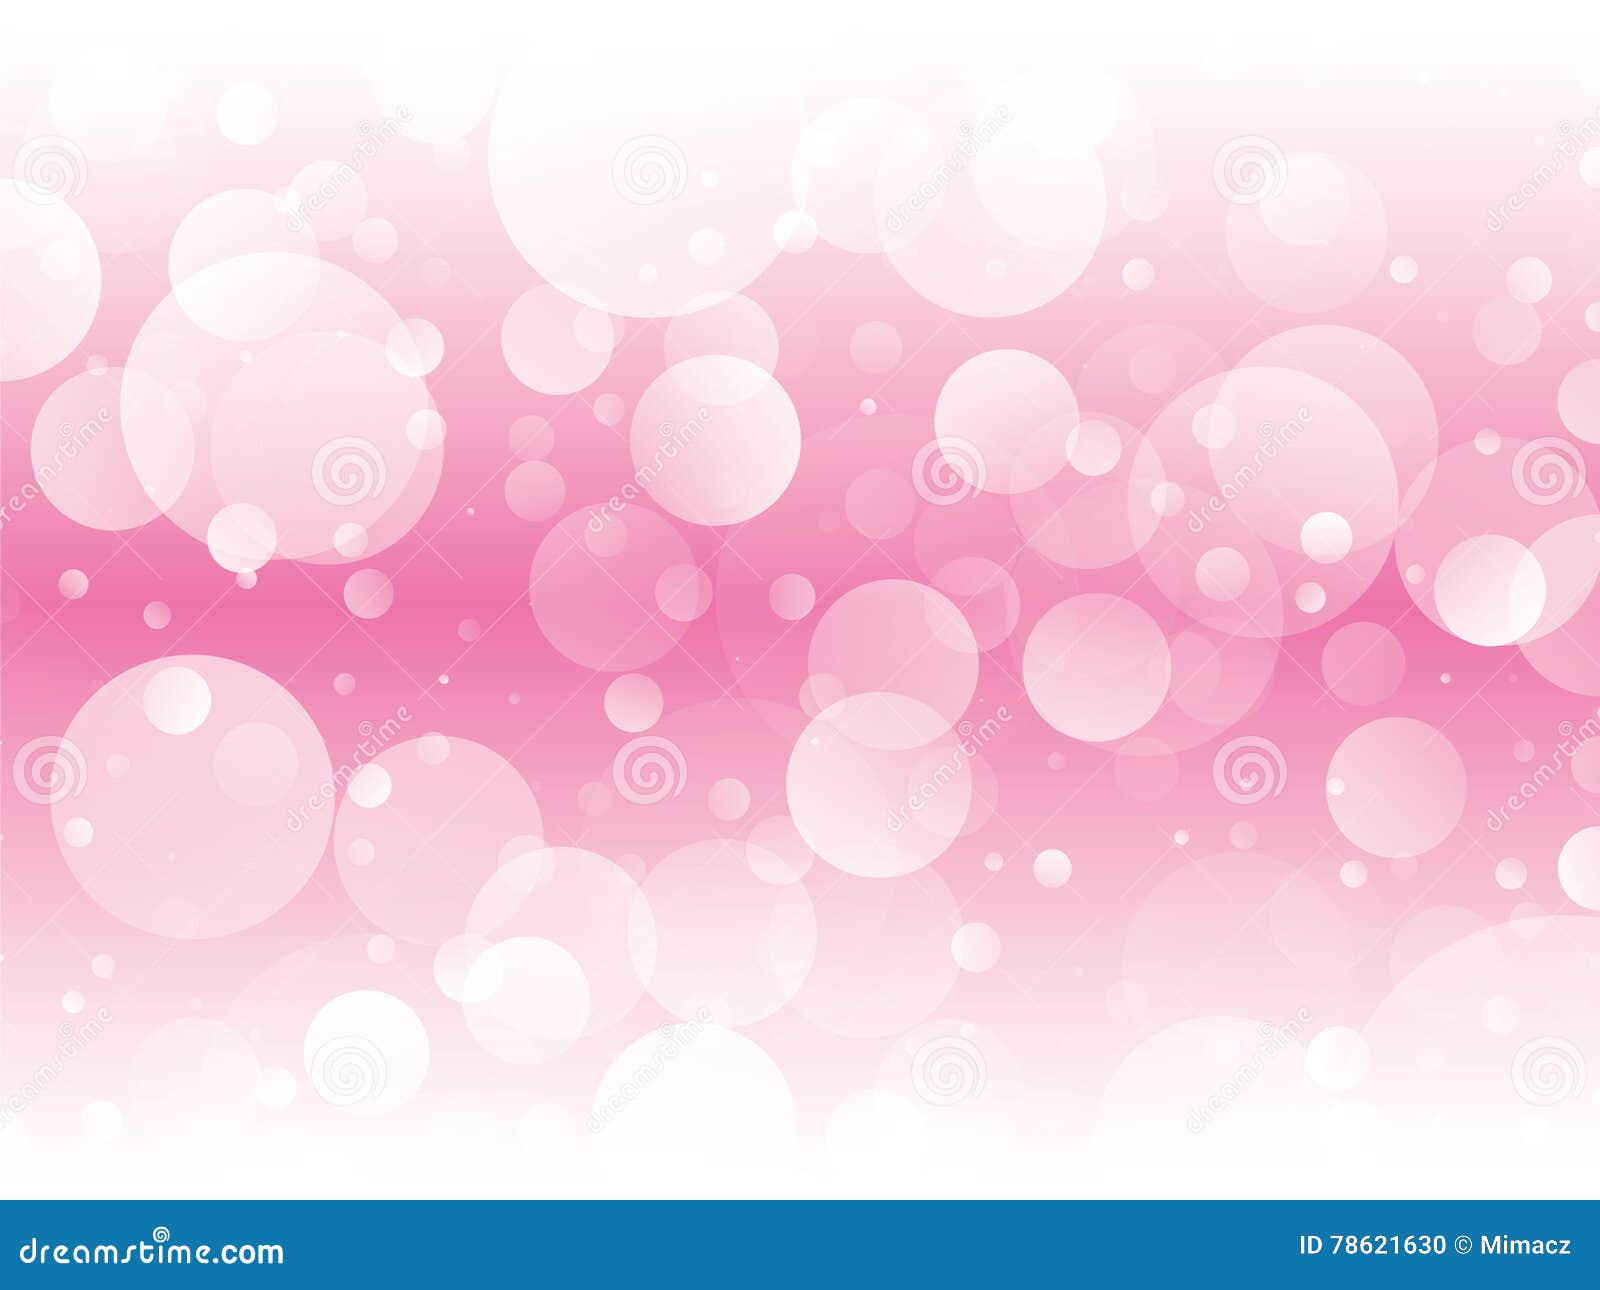 Pink Circles Love Background Stock Illustration - Illustration of circles,  light: 78621630